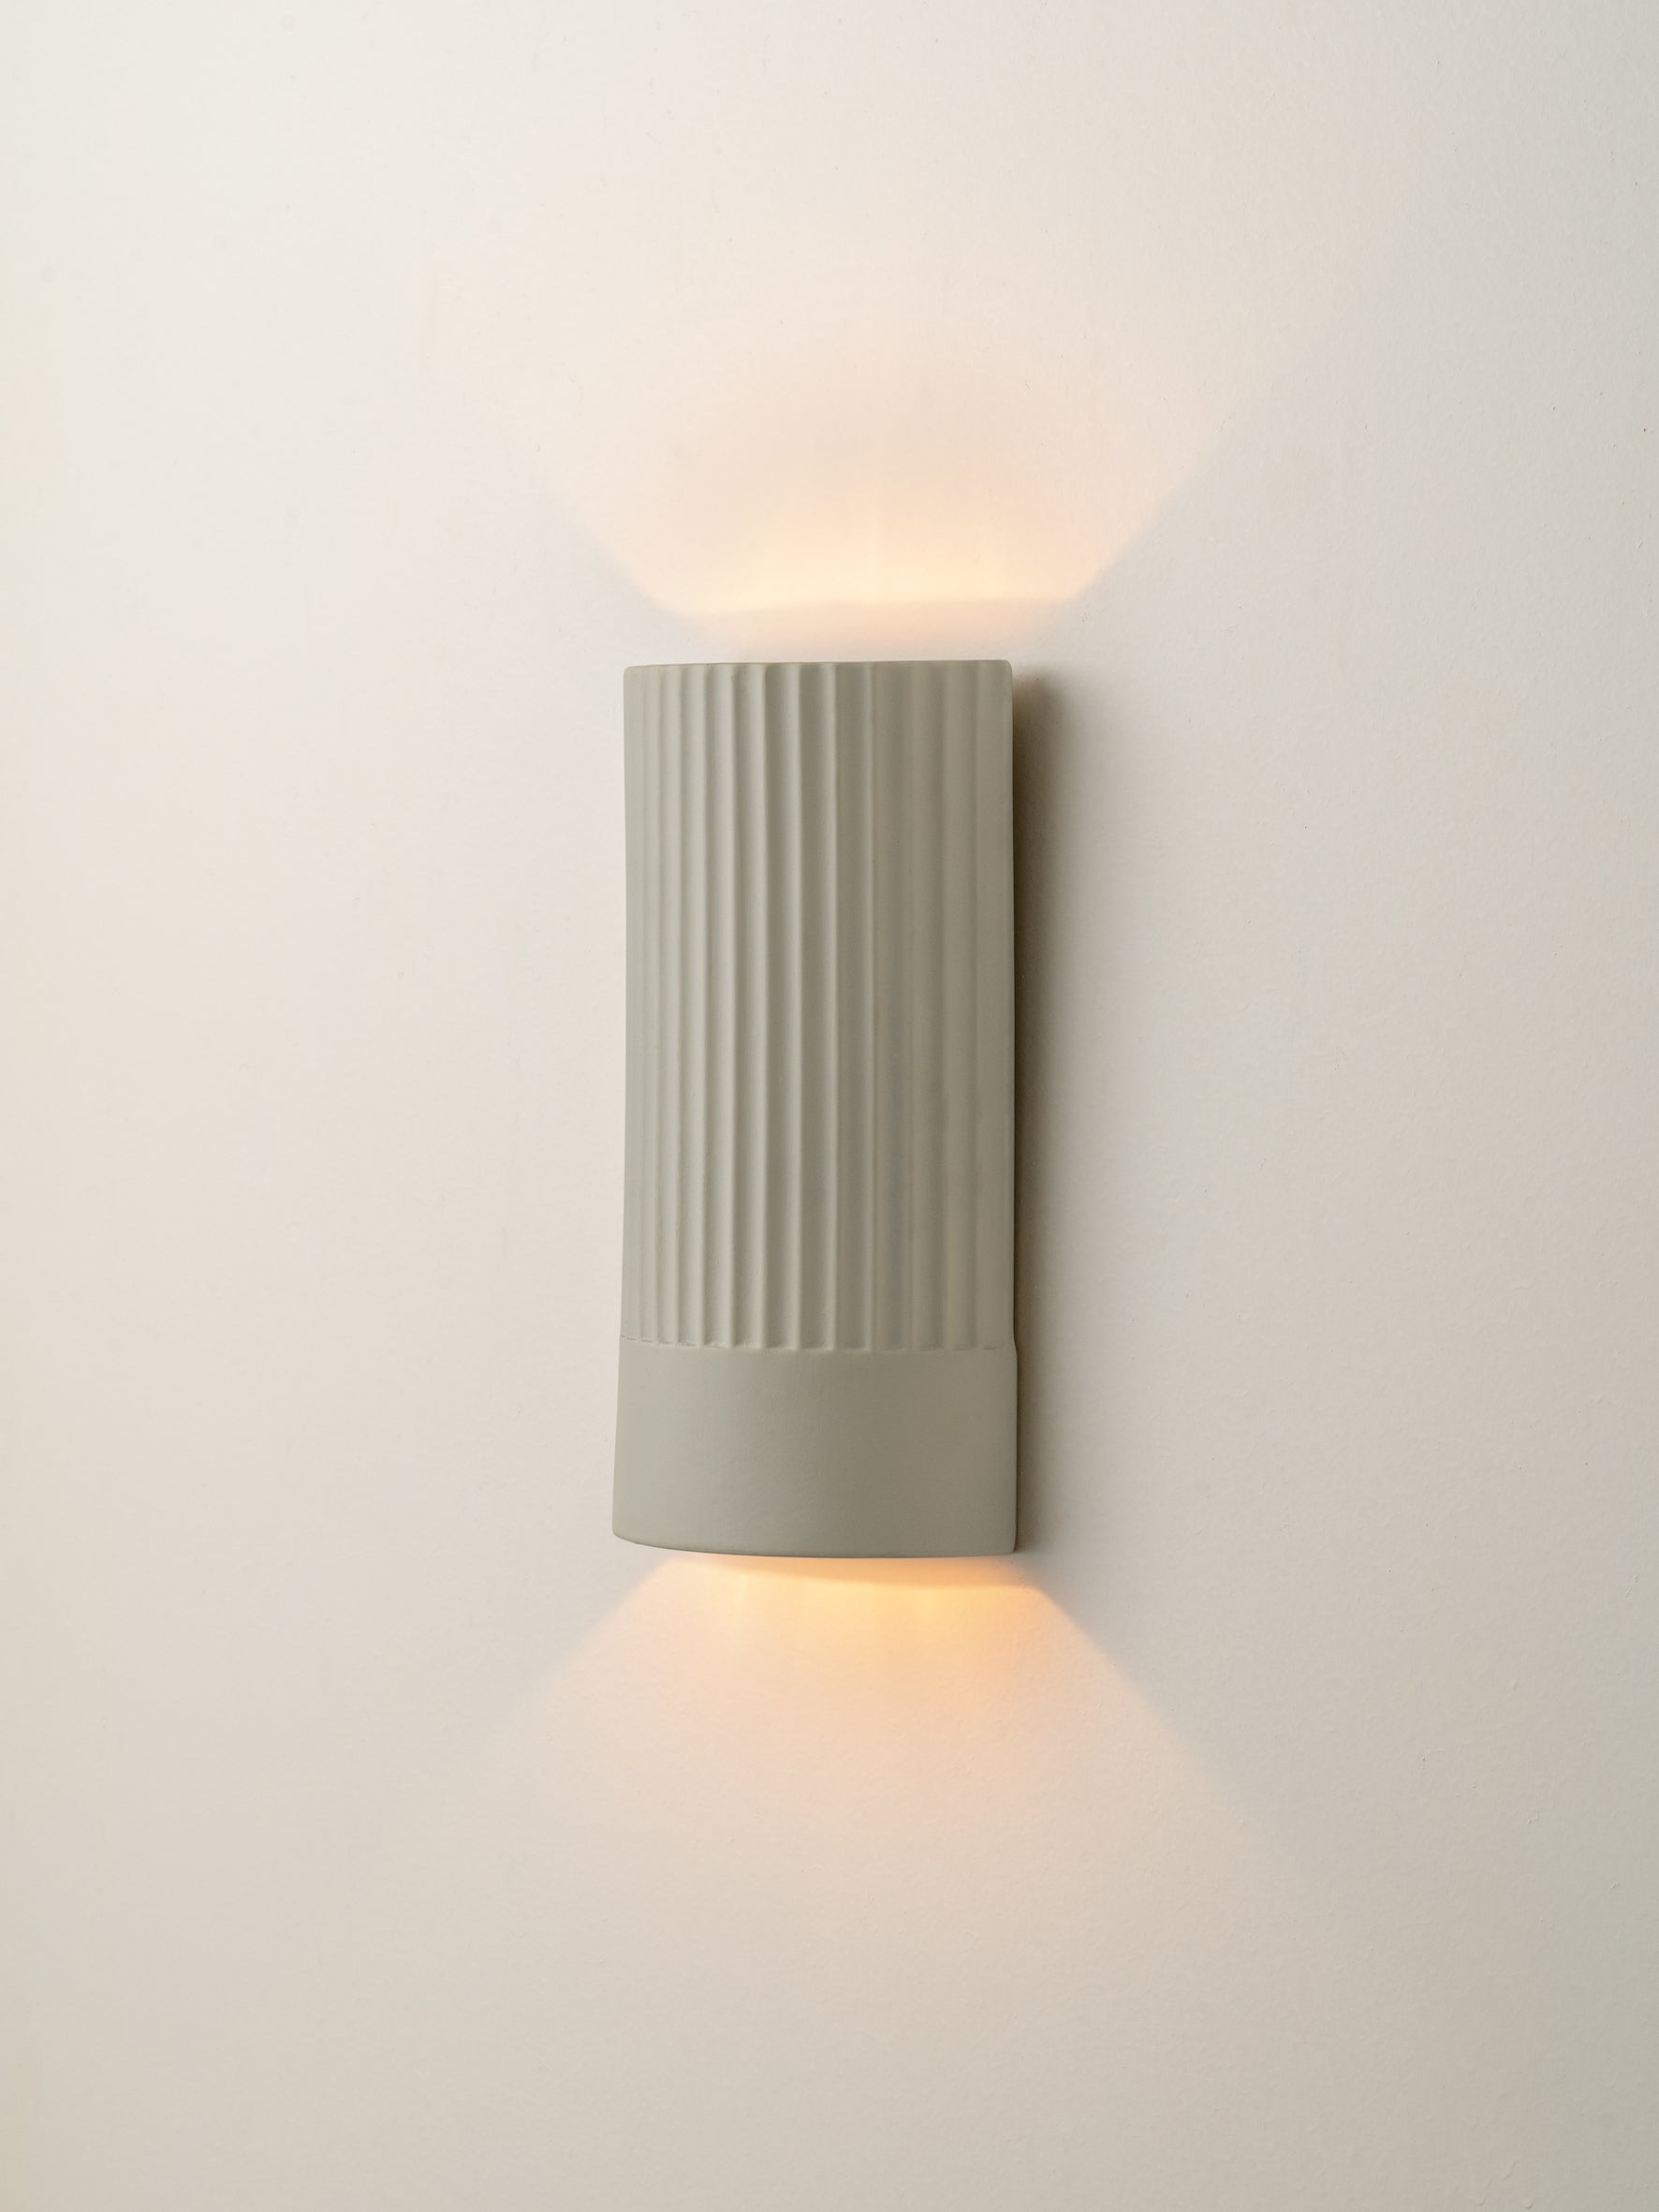 Enza - warm white  ribbed concrete wall light